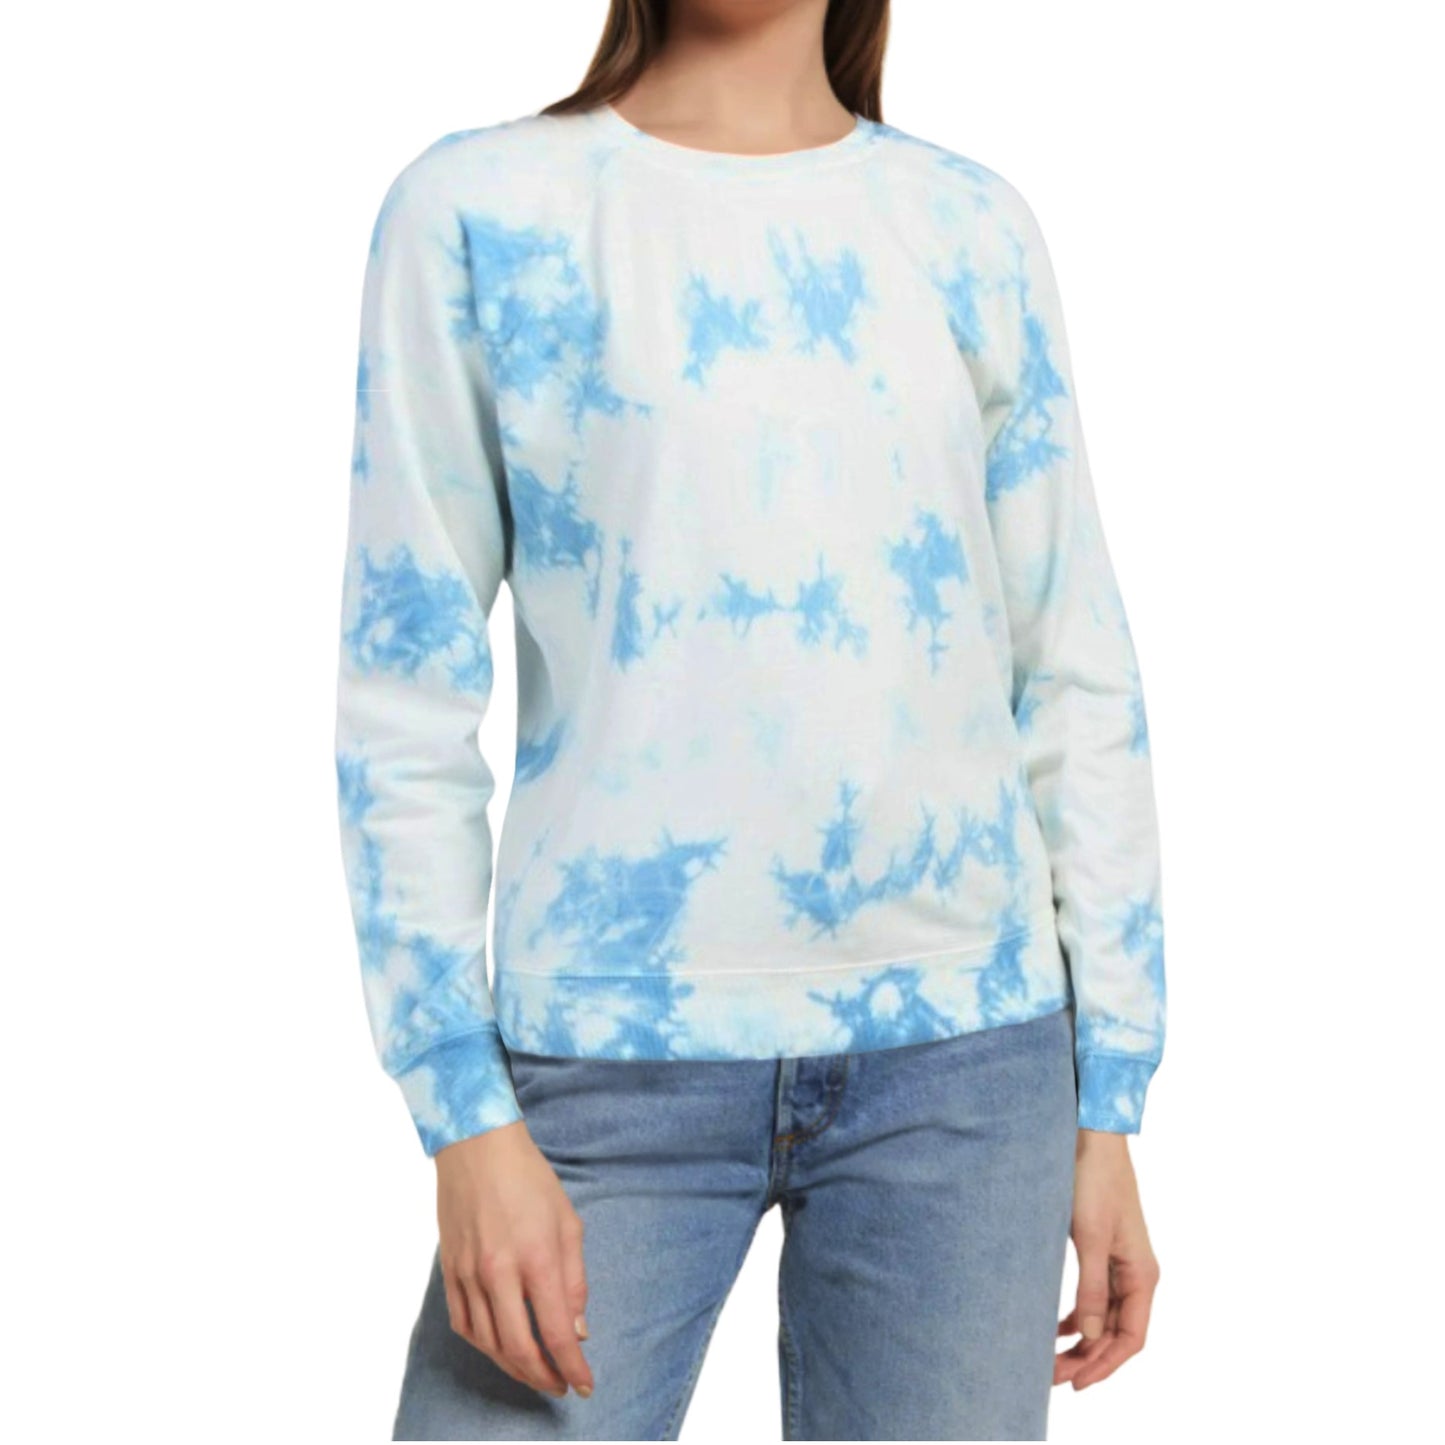 Lucky Brand Women's Tie Dye Print Soft Cotton Casual Sweatshirt Top